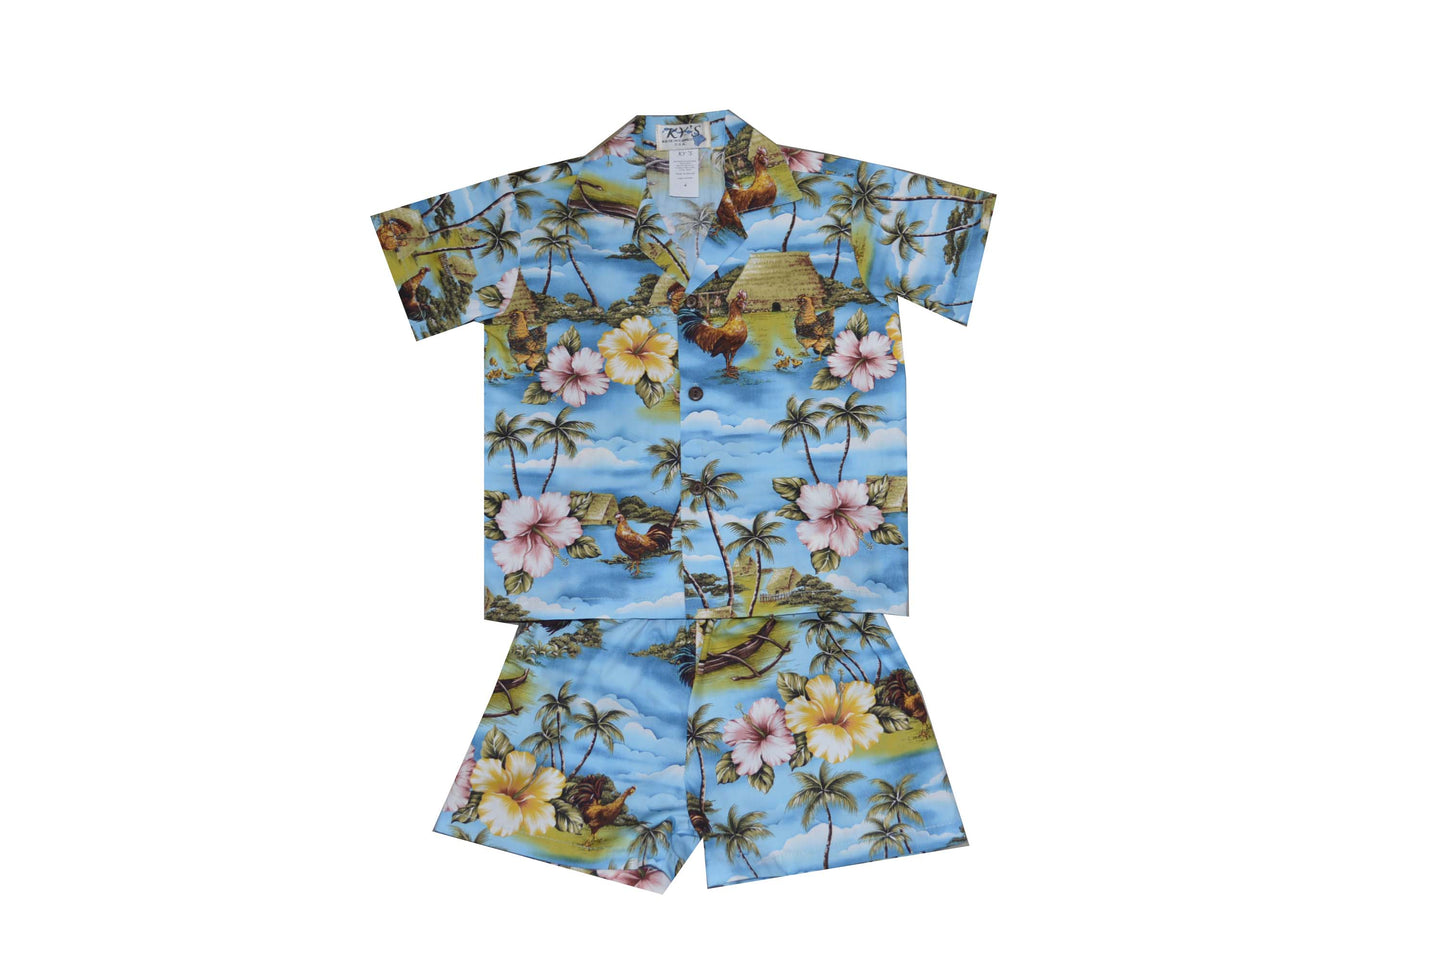 Hawaiian Island Rooster Boy Shirt and Little Boy Sets